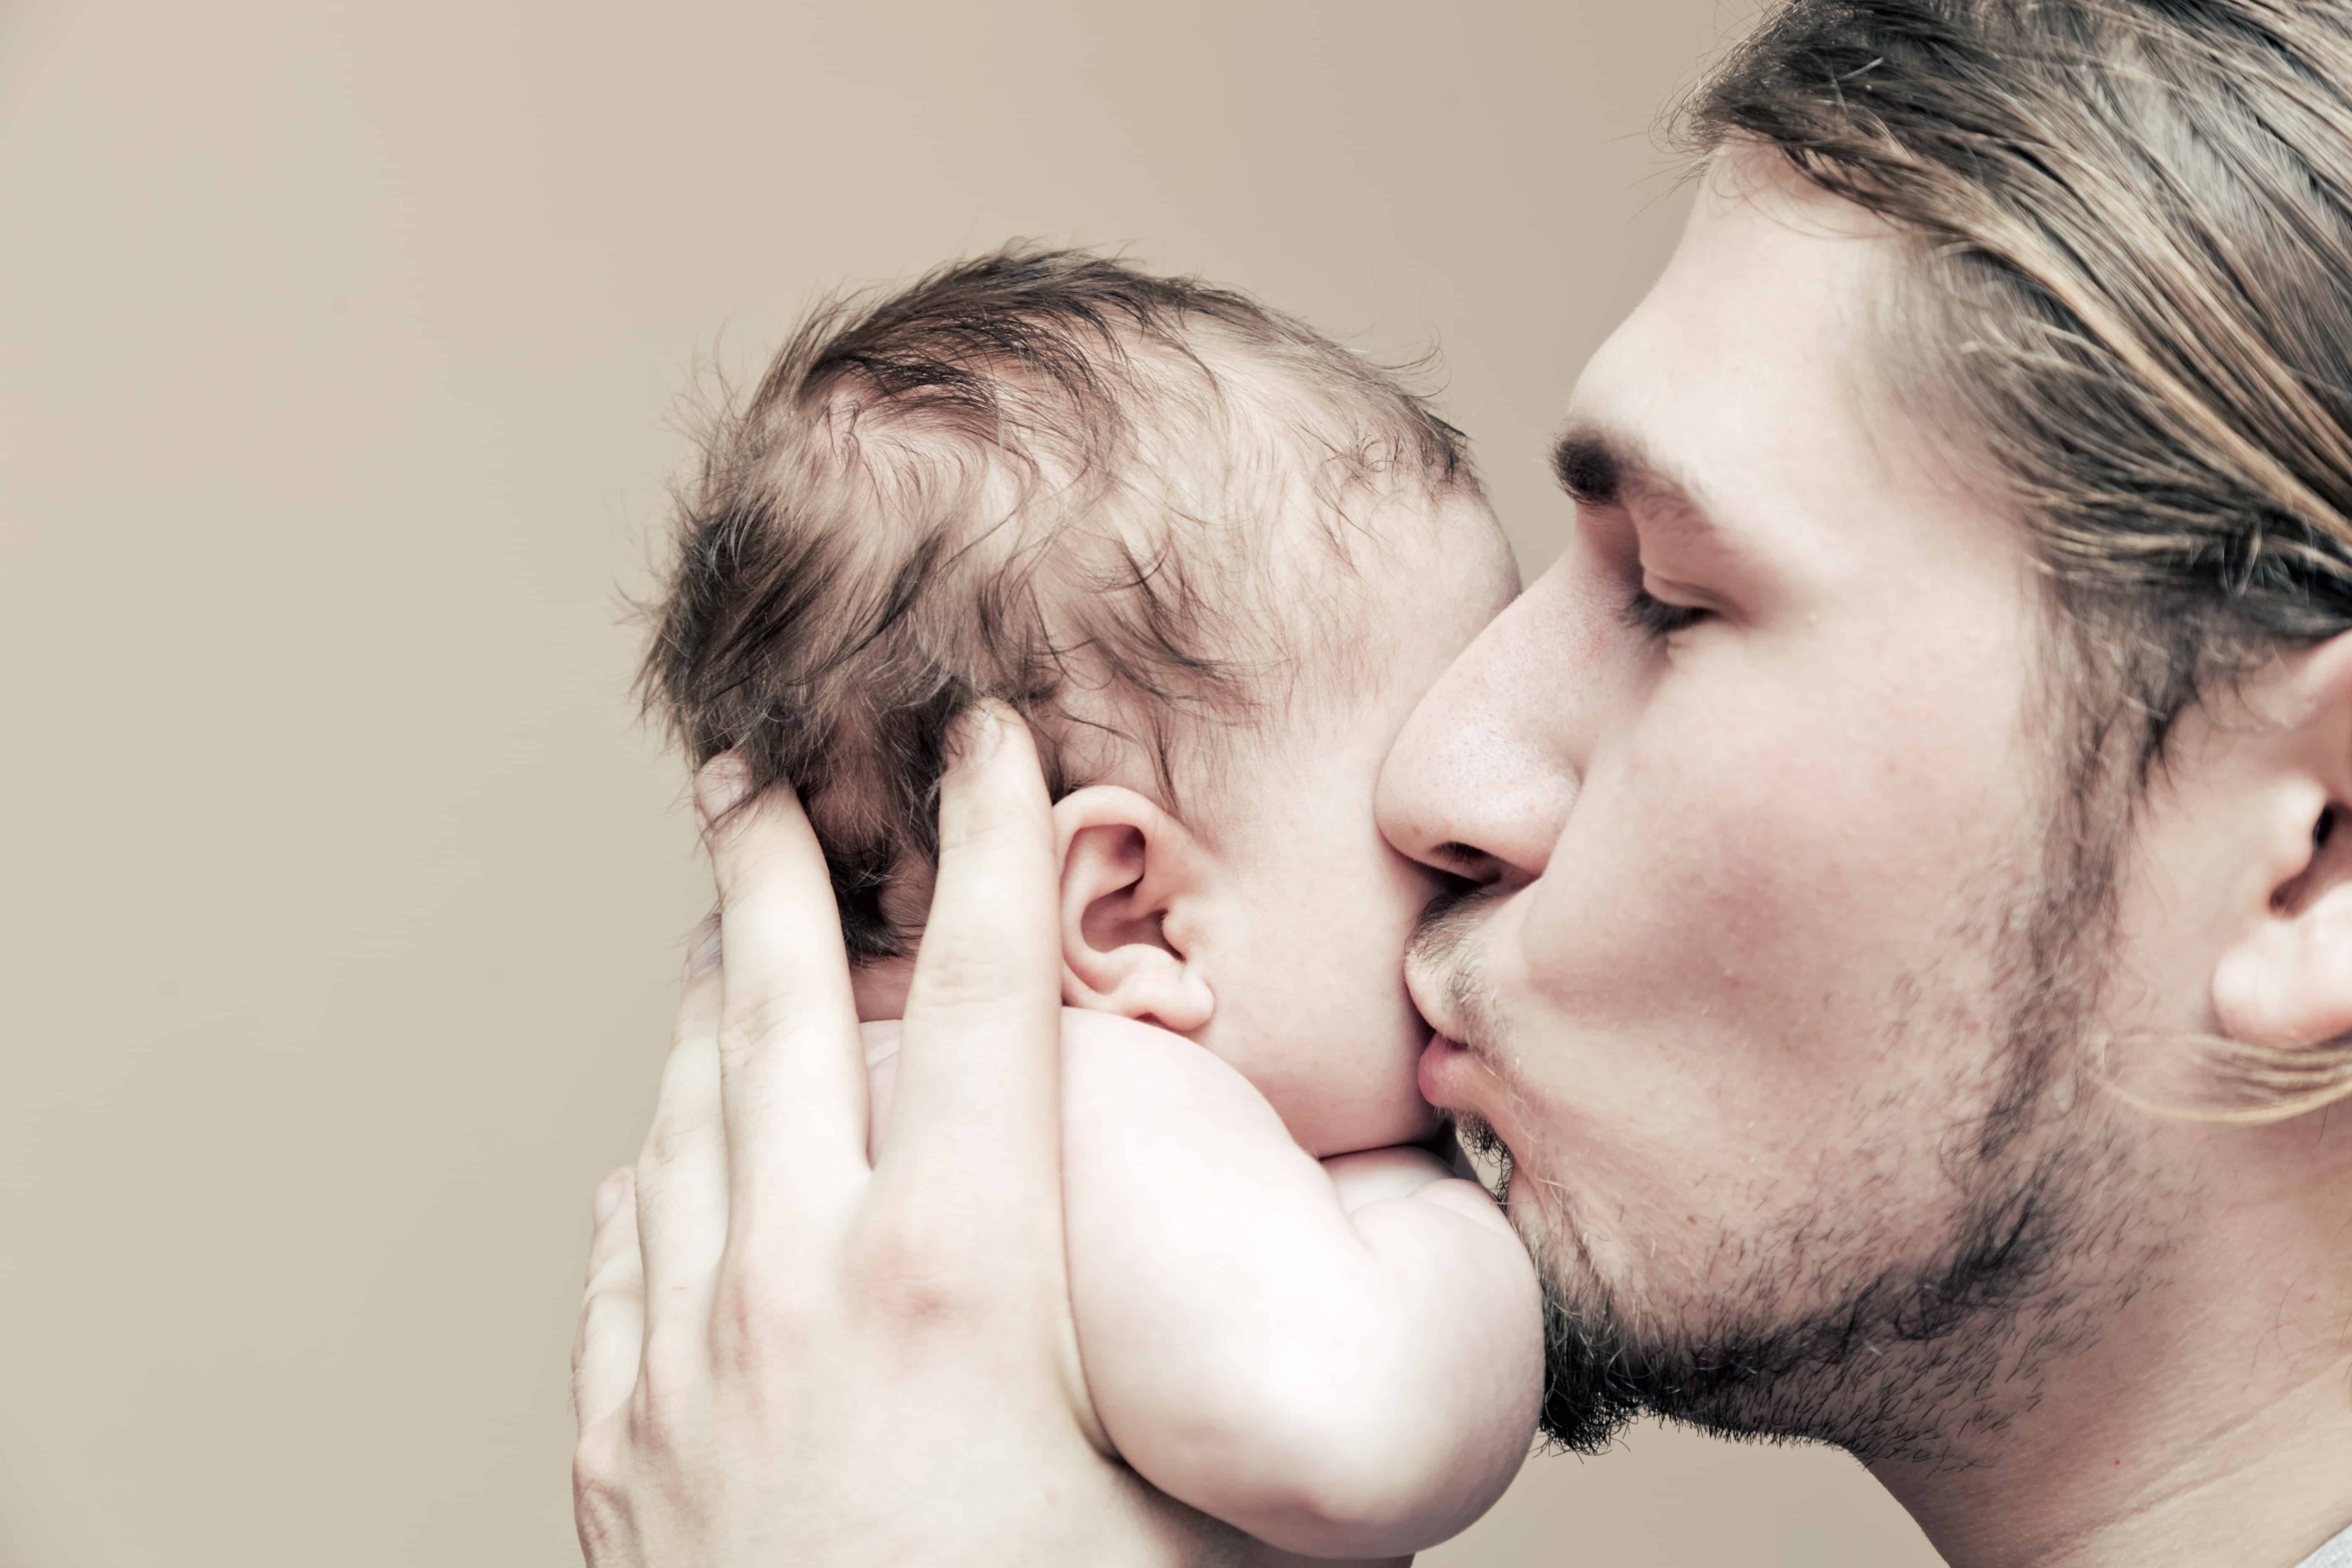 Мама папа поцелуй. Папа целует малыша. Папа целует сына. Папа целует новорожденного. Младенец целует папу.